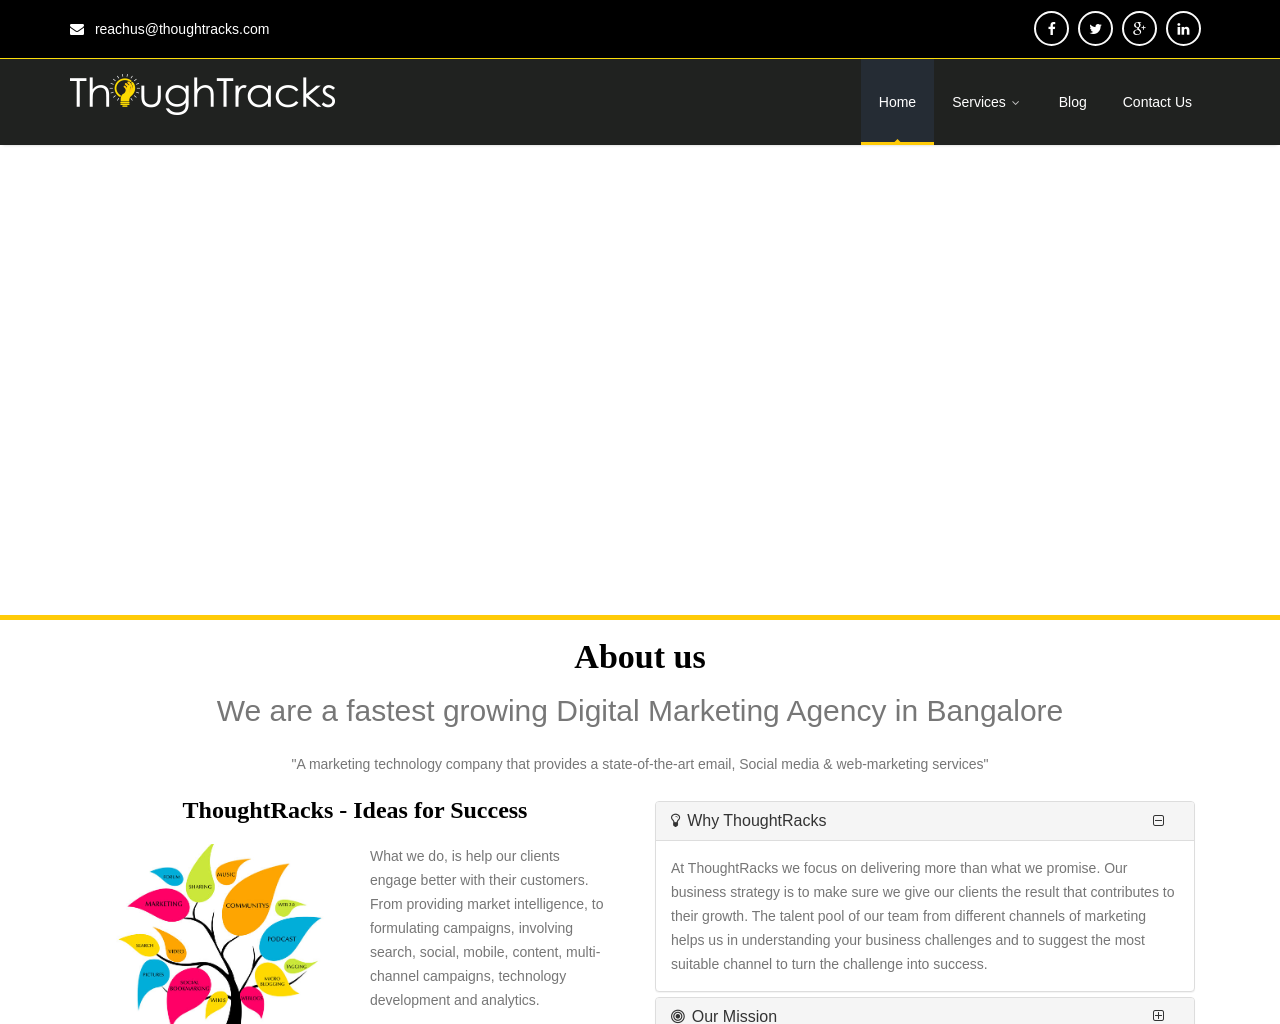 thoughtracks.com